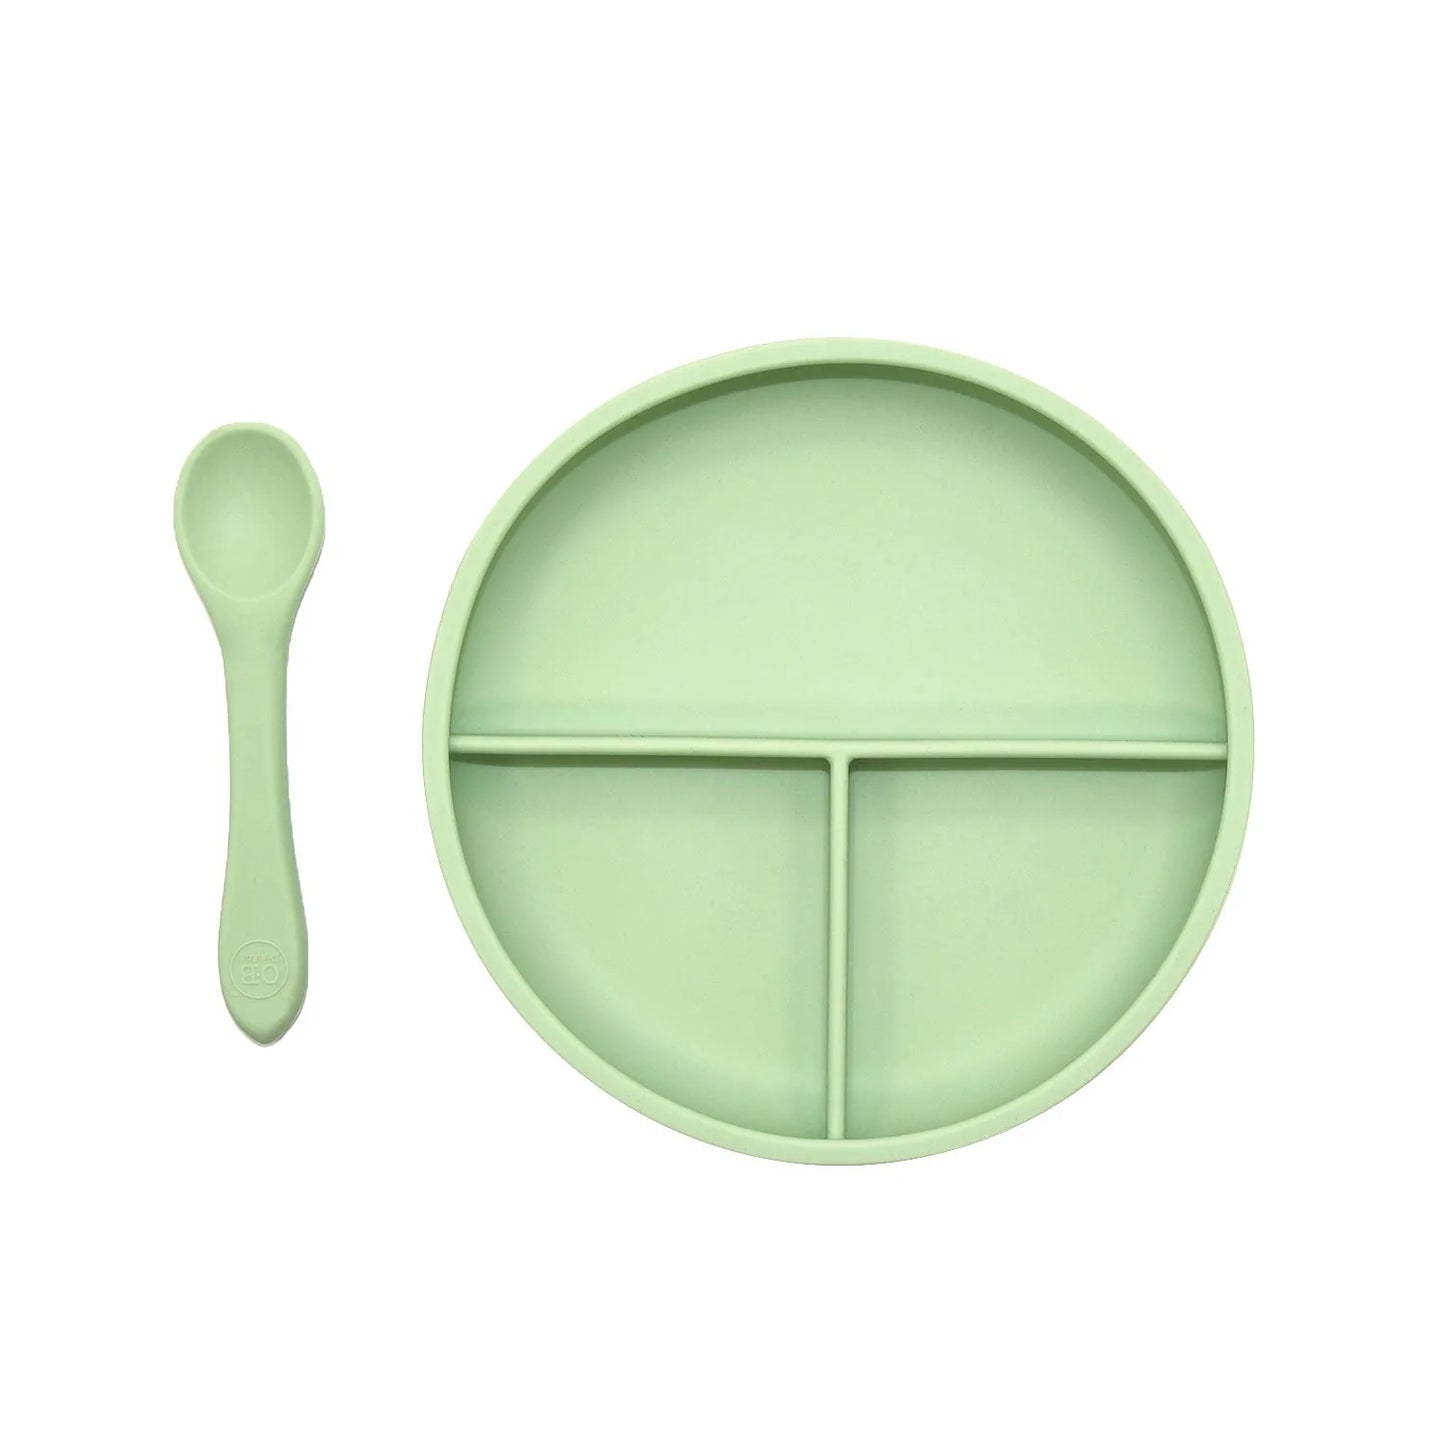 OB Designs Suction Divider Plate & Spoon Set